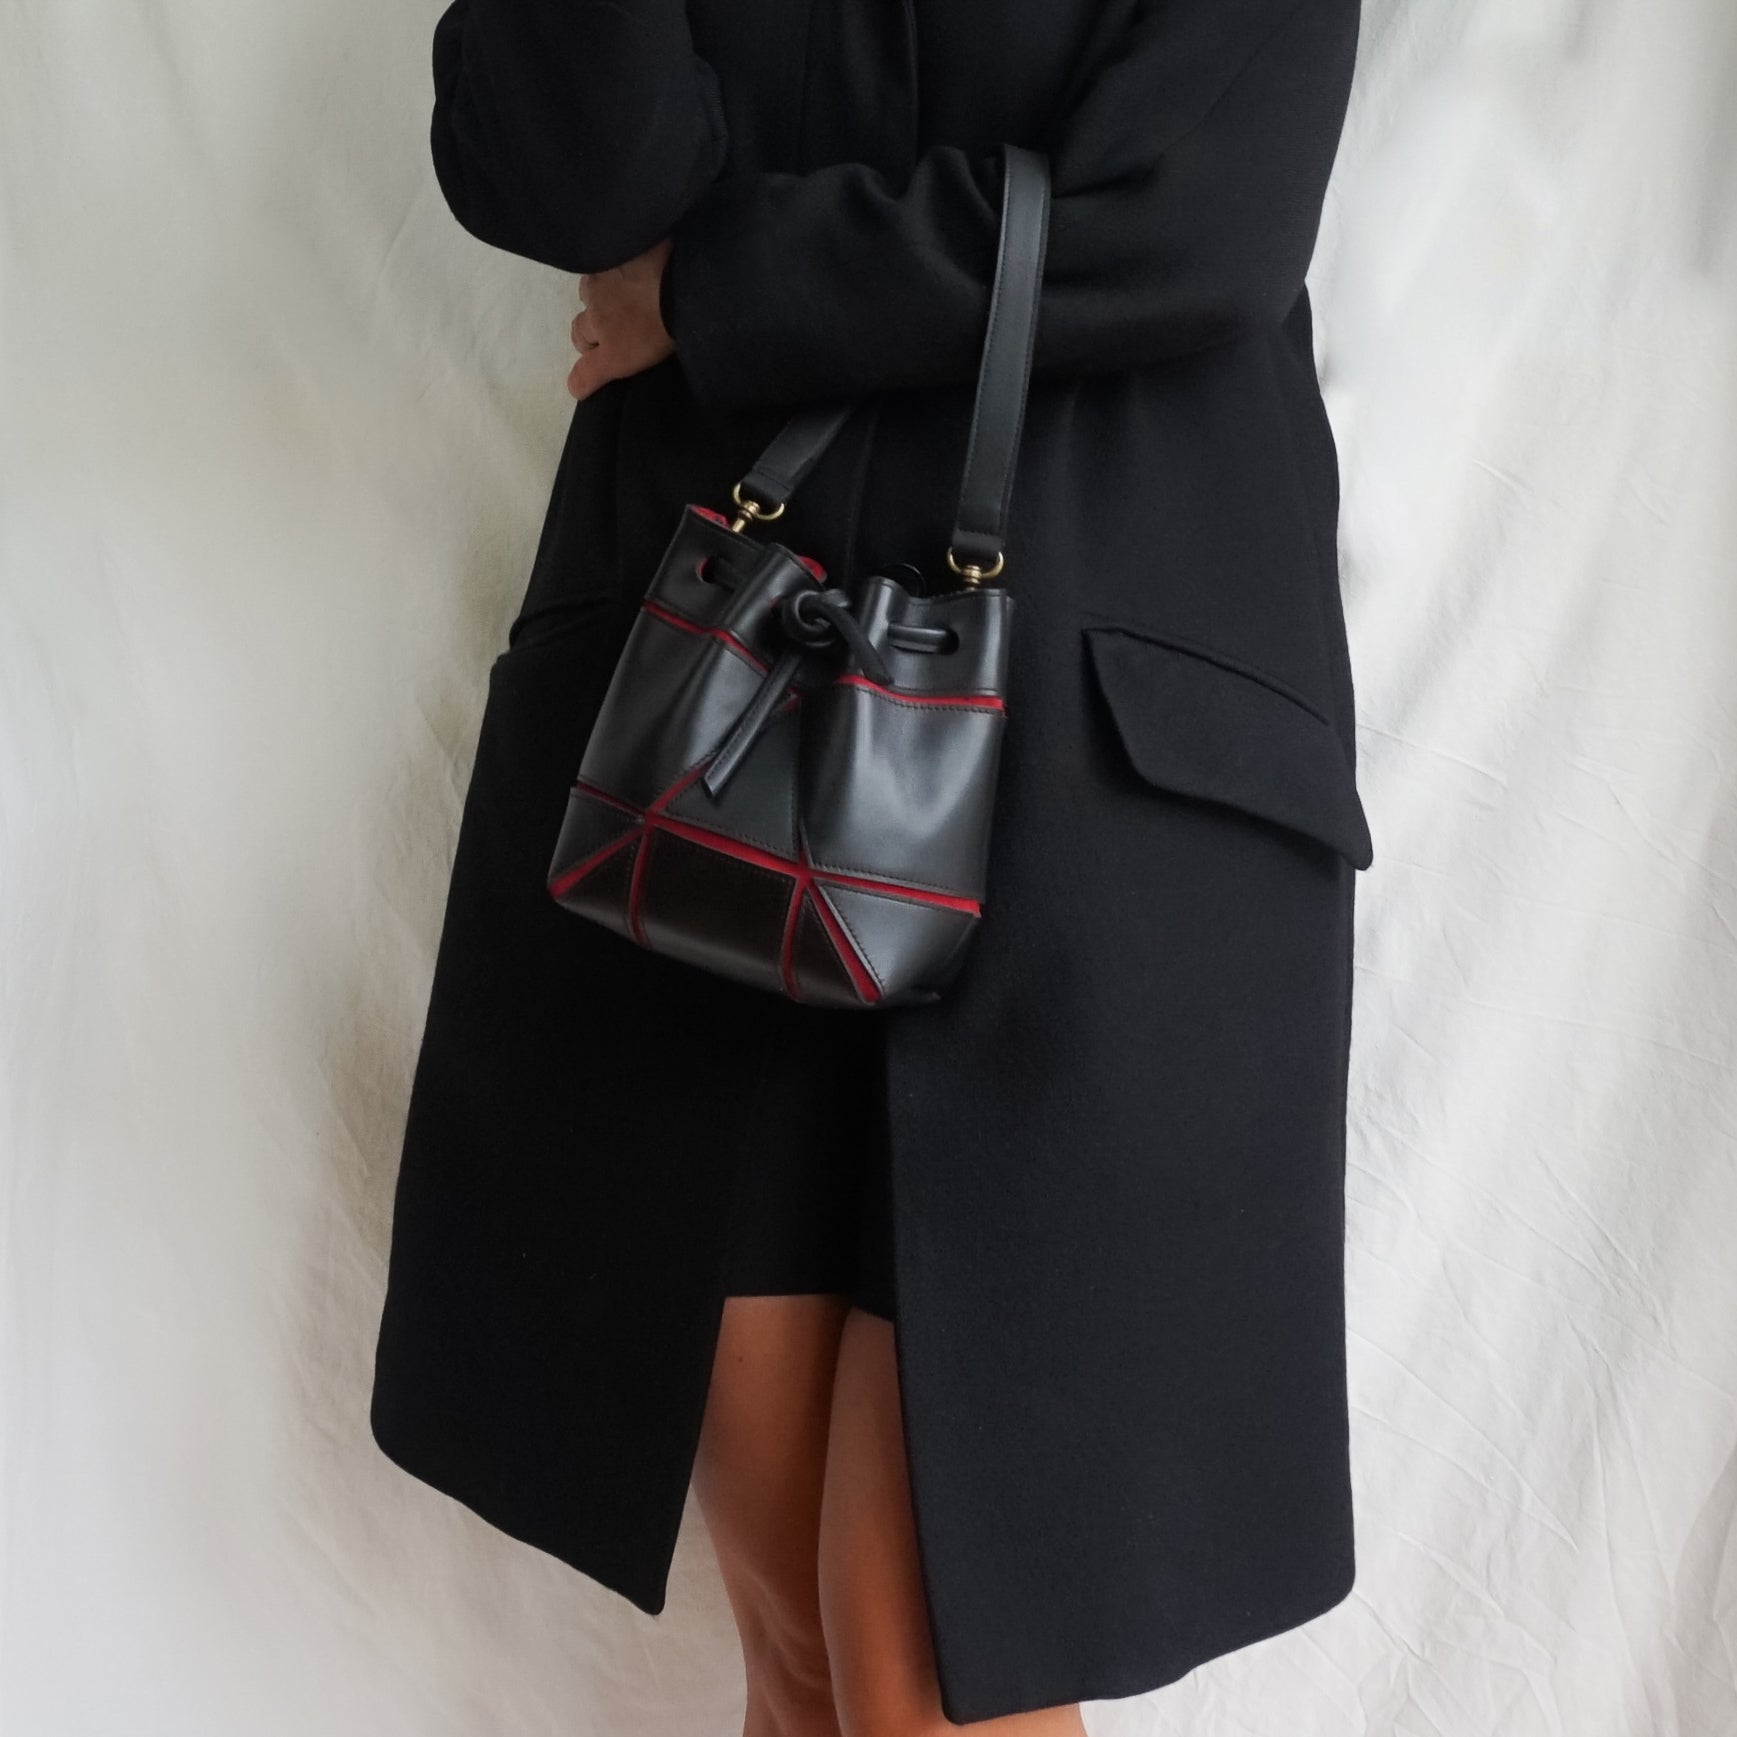 Mini Bucket Bag - Black with Red Detail by lara kazis munich